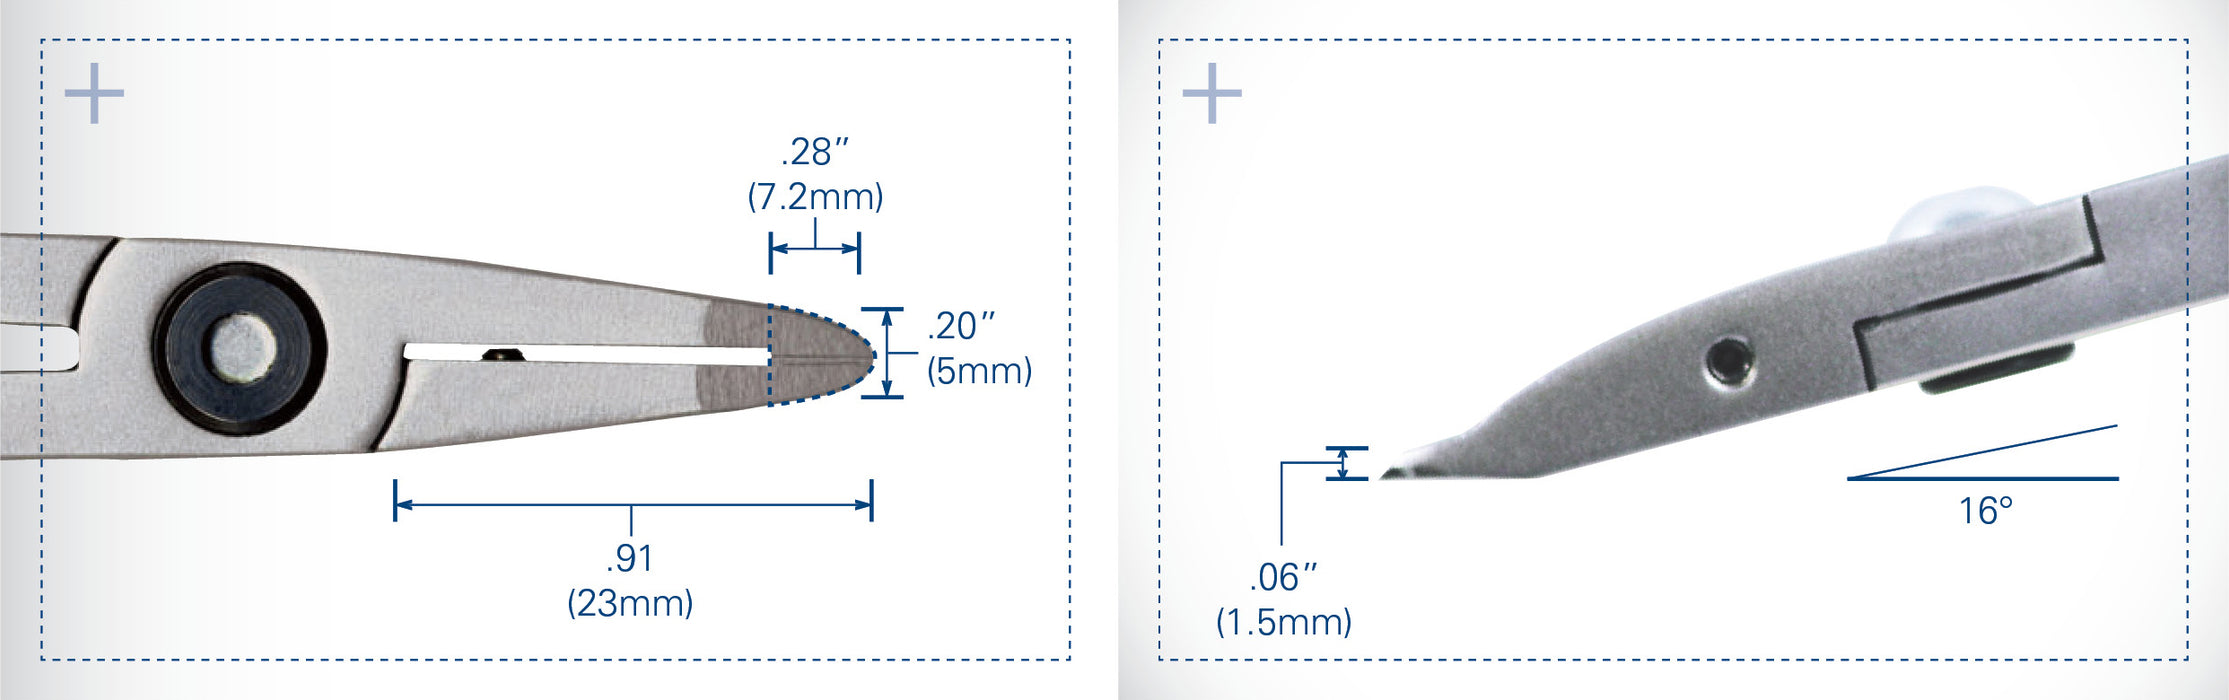 tronex-7070-razor-flush-small-tip-cutter-w-ergo-handles-7